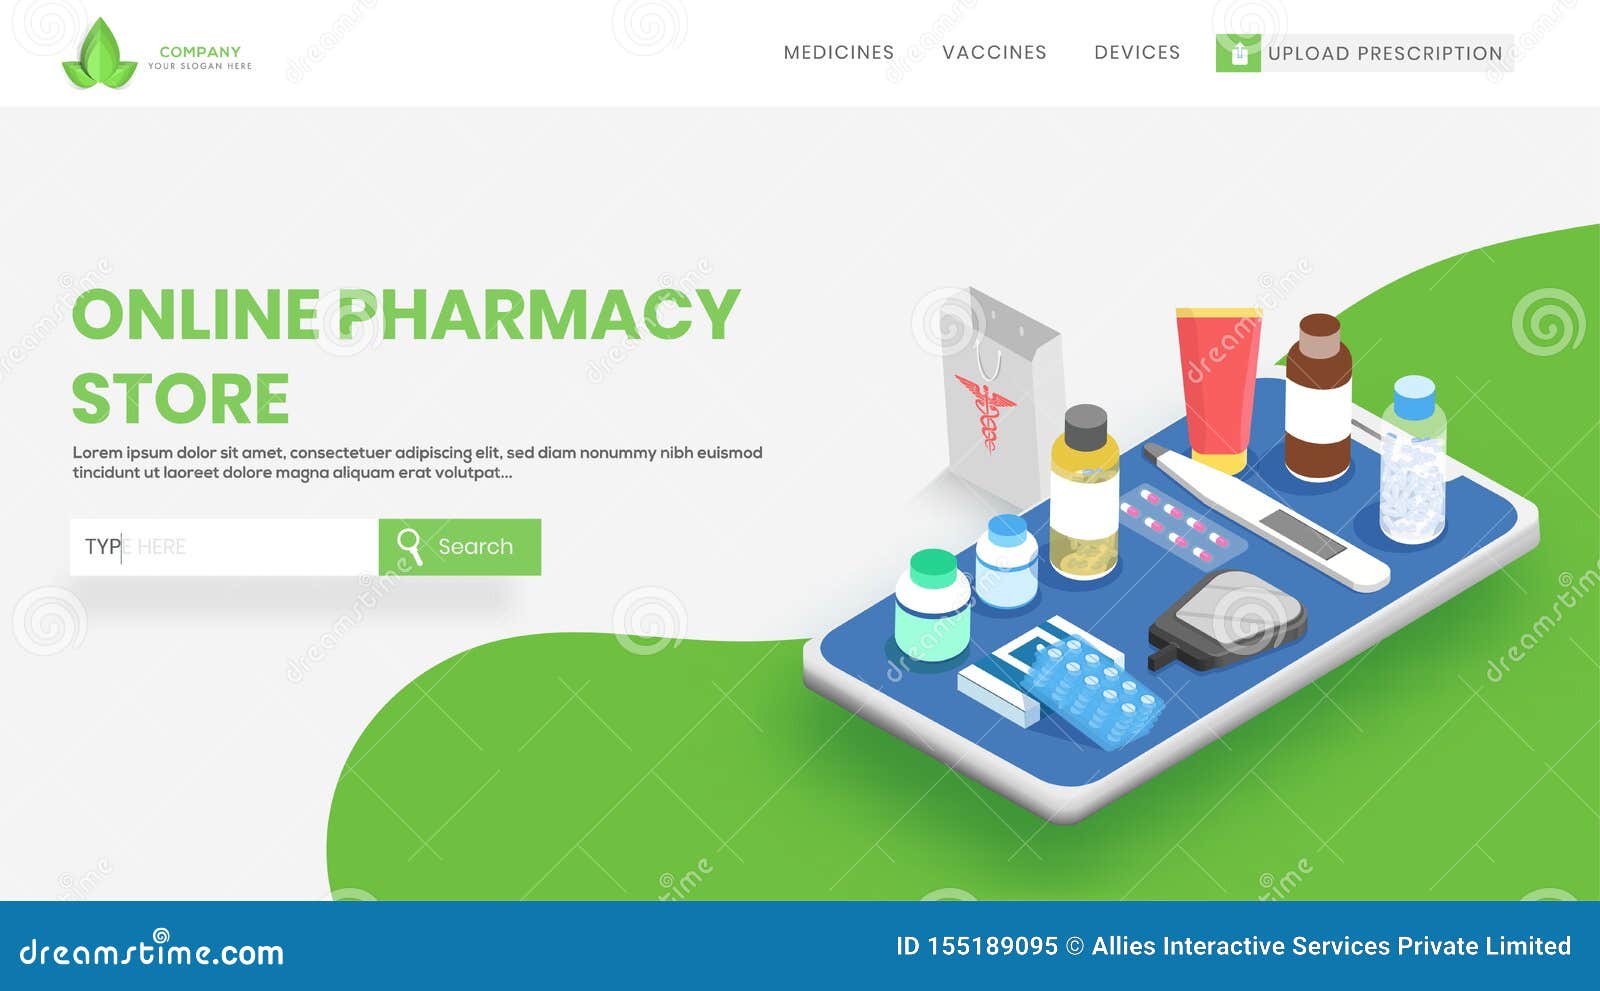 Online Pharmacist Images, Stock Photos & Vectors Shutterstock